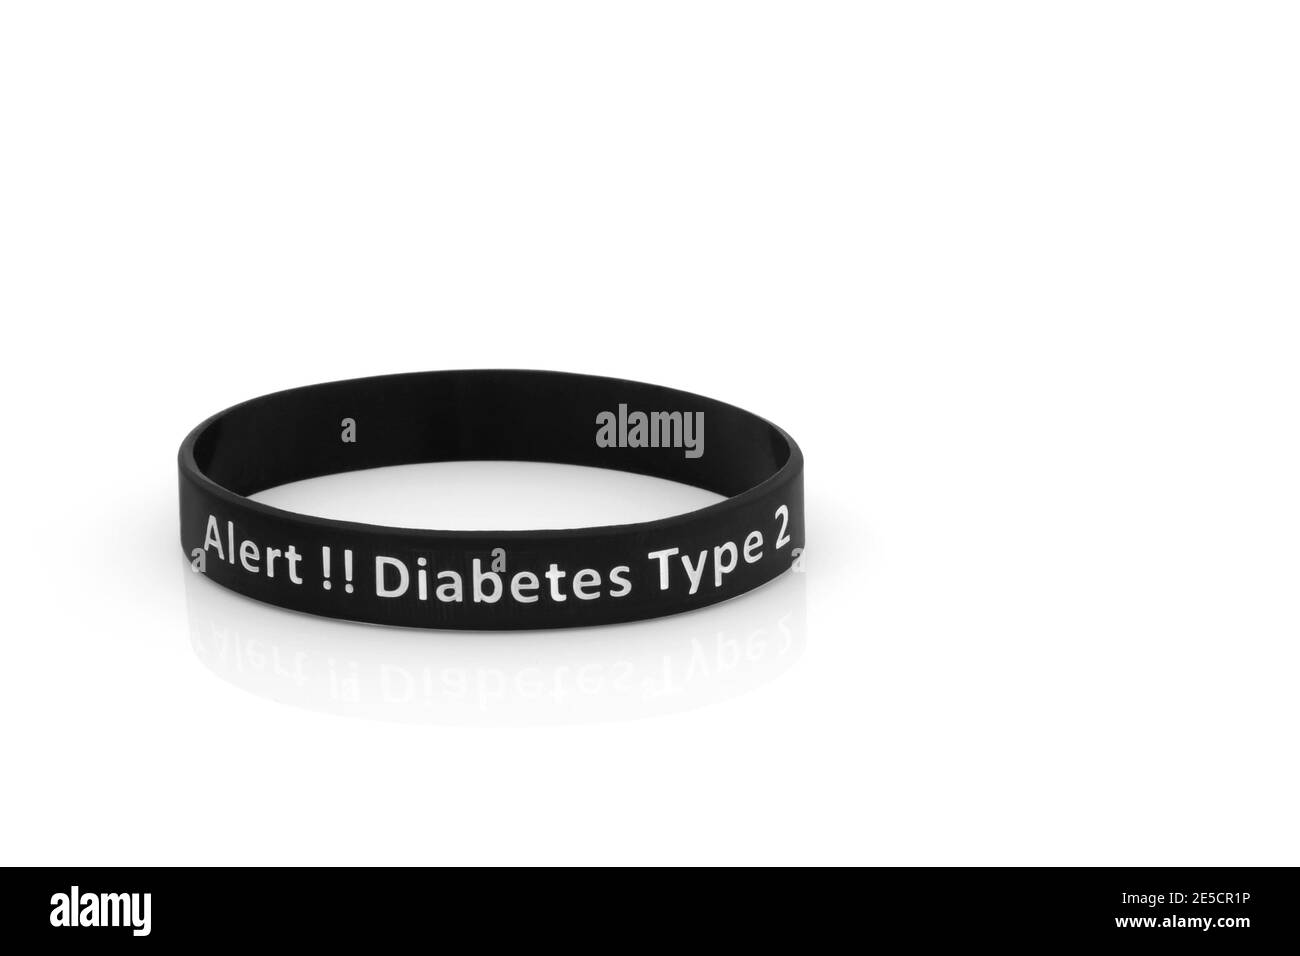 Diabetes type 2 medical alert wristband in black rubber silicone on white background. Stock Photo